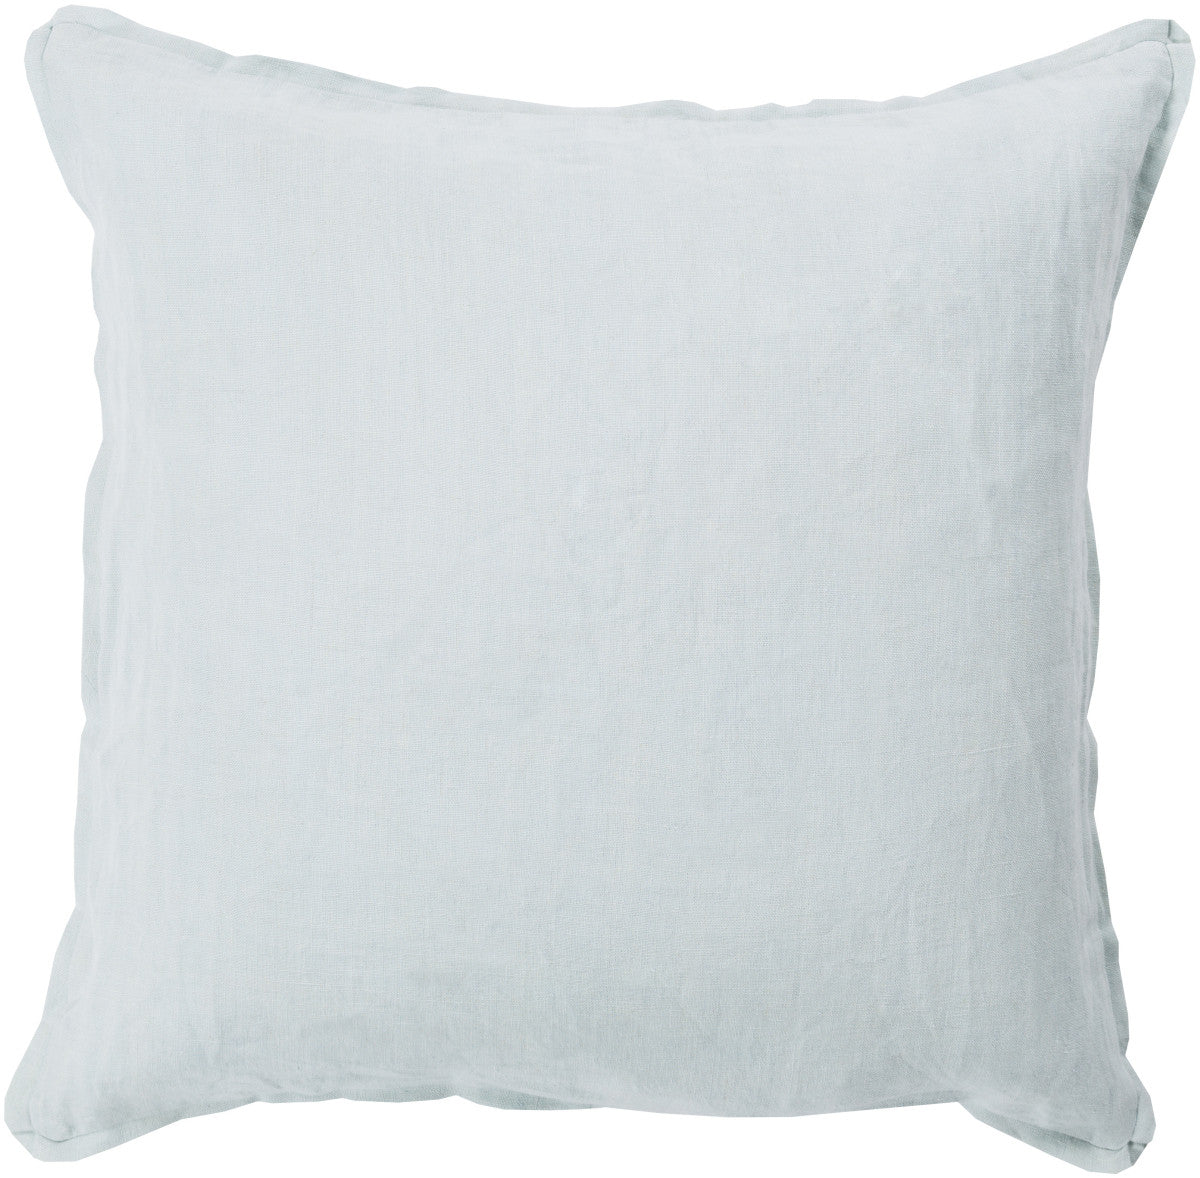 Surya Solid Luxury in Linen SL-001 Pillow main image